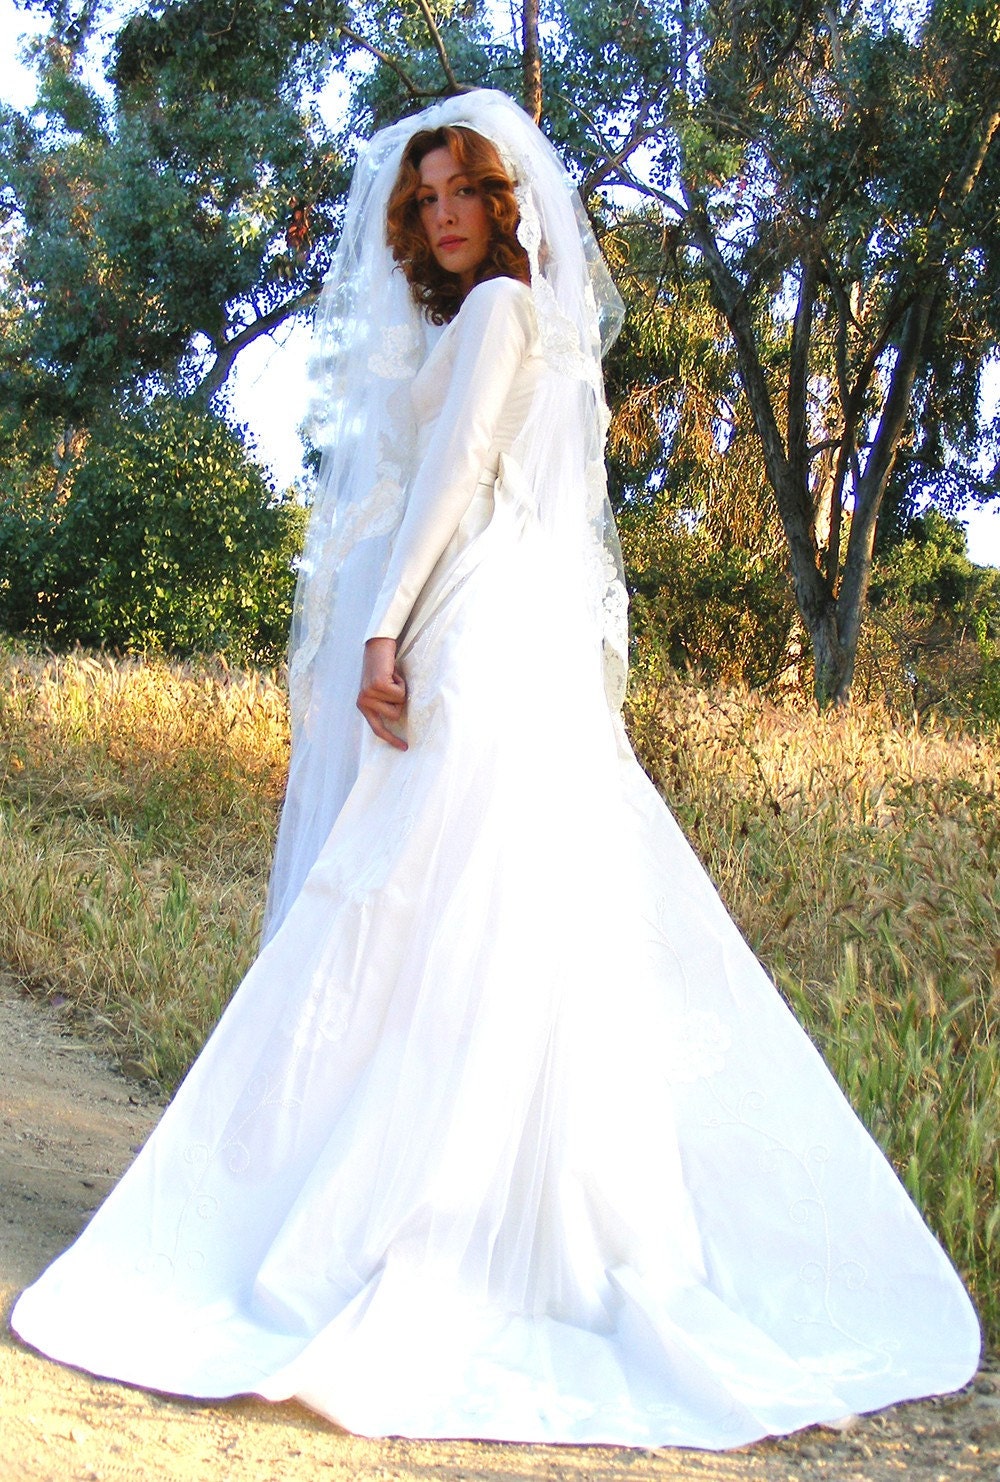 Jackie O Wedding Dress by TavinShop on Etsy